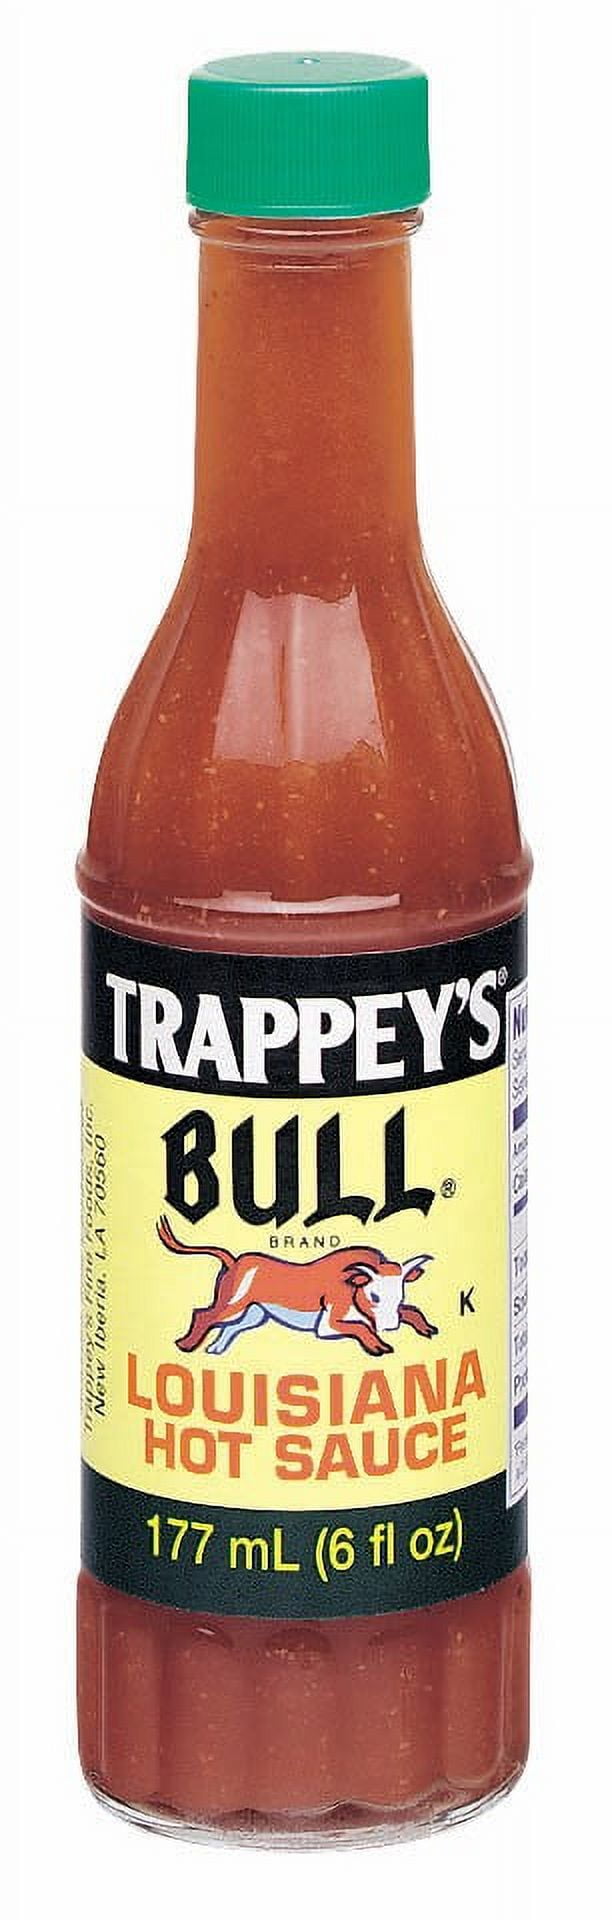 Trappey's Bull Louisiana Hot Sauce, 6 fl oz - Foods Co.